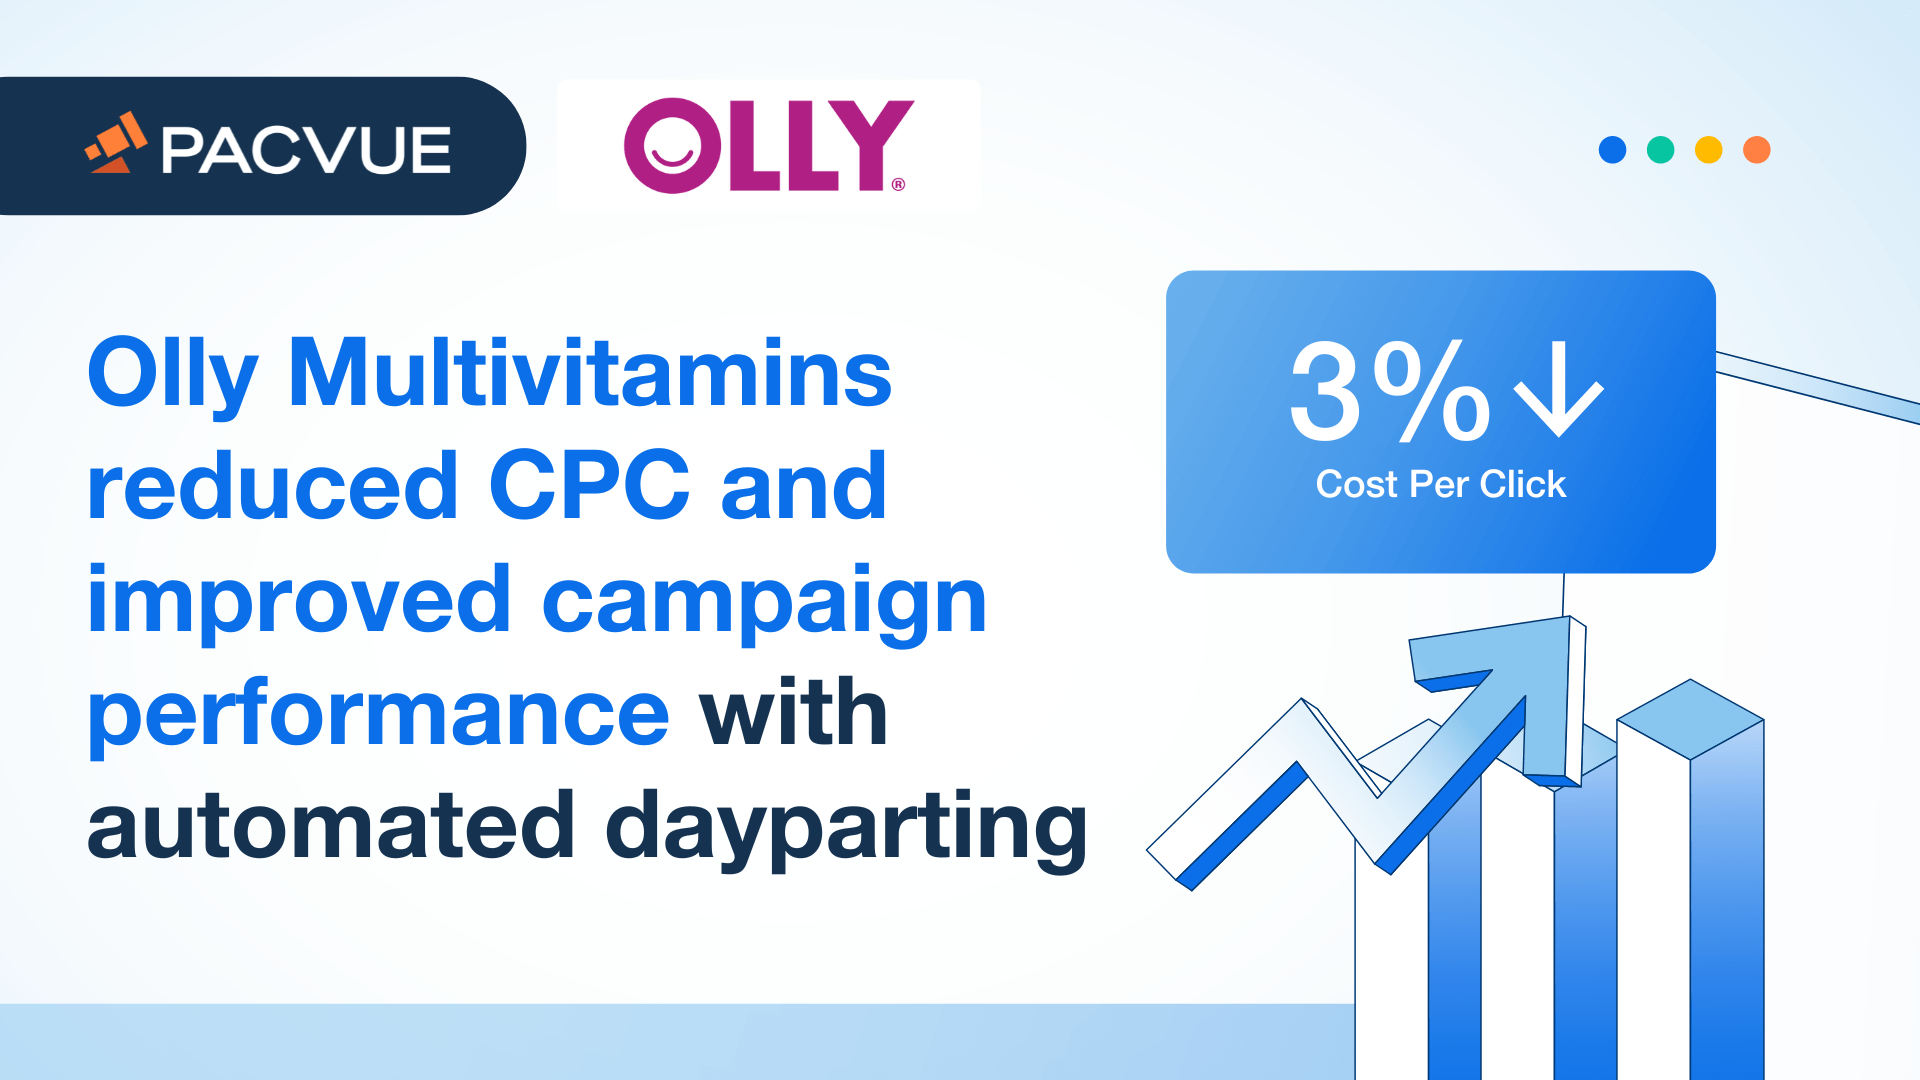 Olly Multivitamins社、自動デイスパーティングでCPCを削減し、キャンペーンパフォーマンスを改善